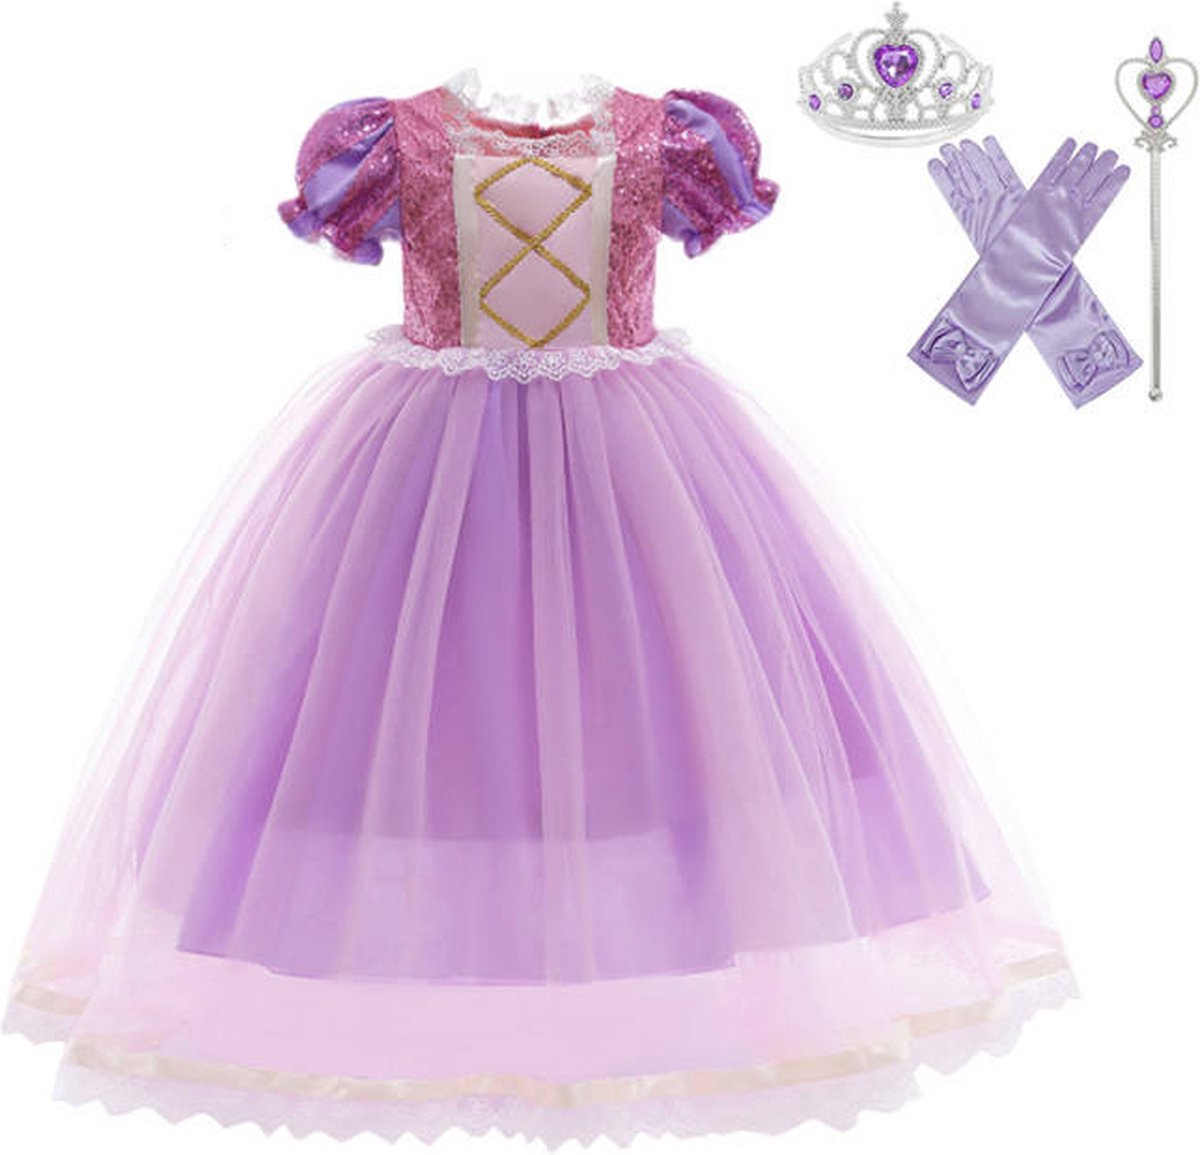 Joya Kids® Rapunzel Prinsessenjurk meisje | Verkleedjurken meisjes | Rapunzel jurk Roze en Paars | Met Kroon en Toverstaf | maat 134/140 (140)